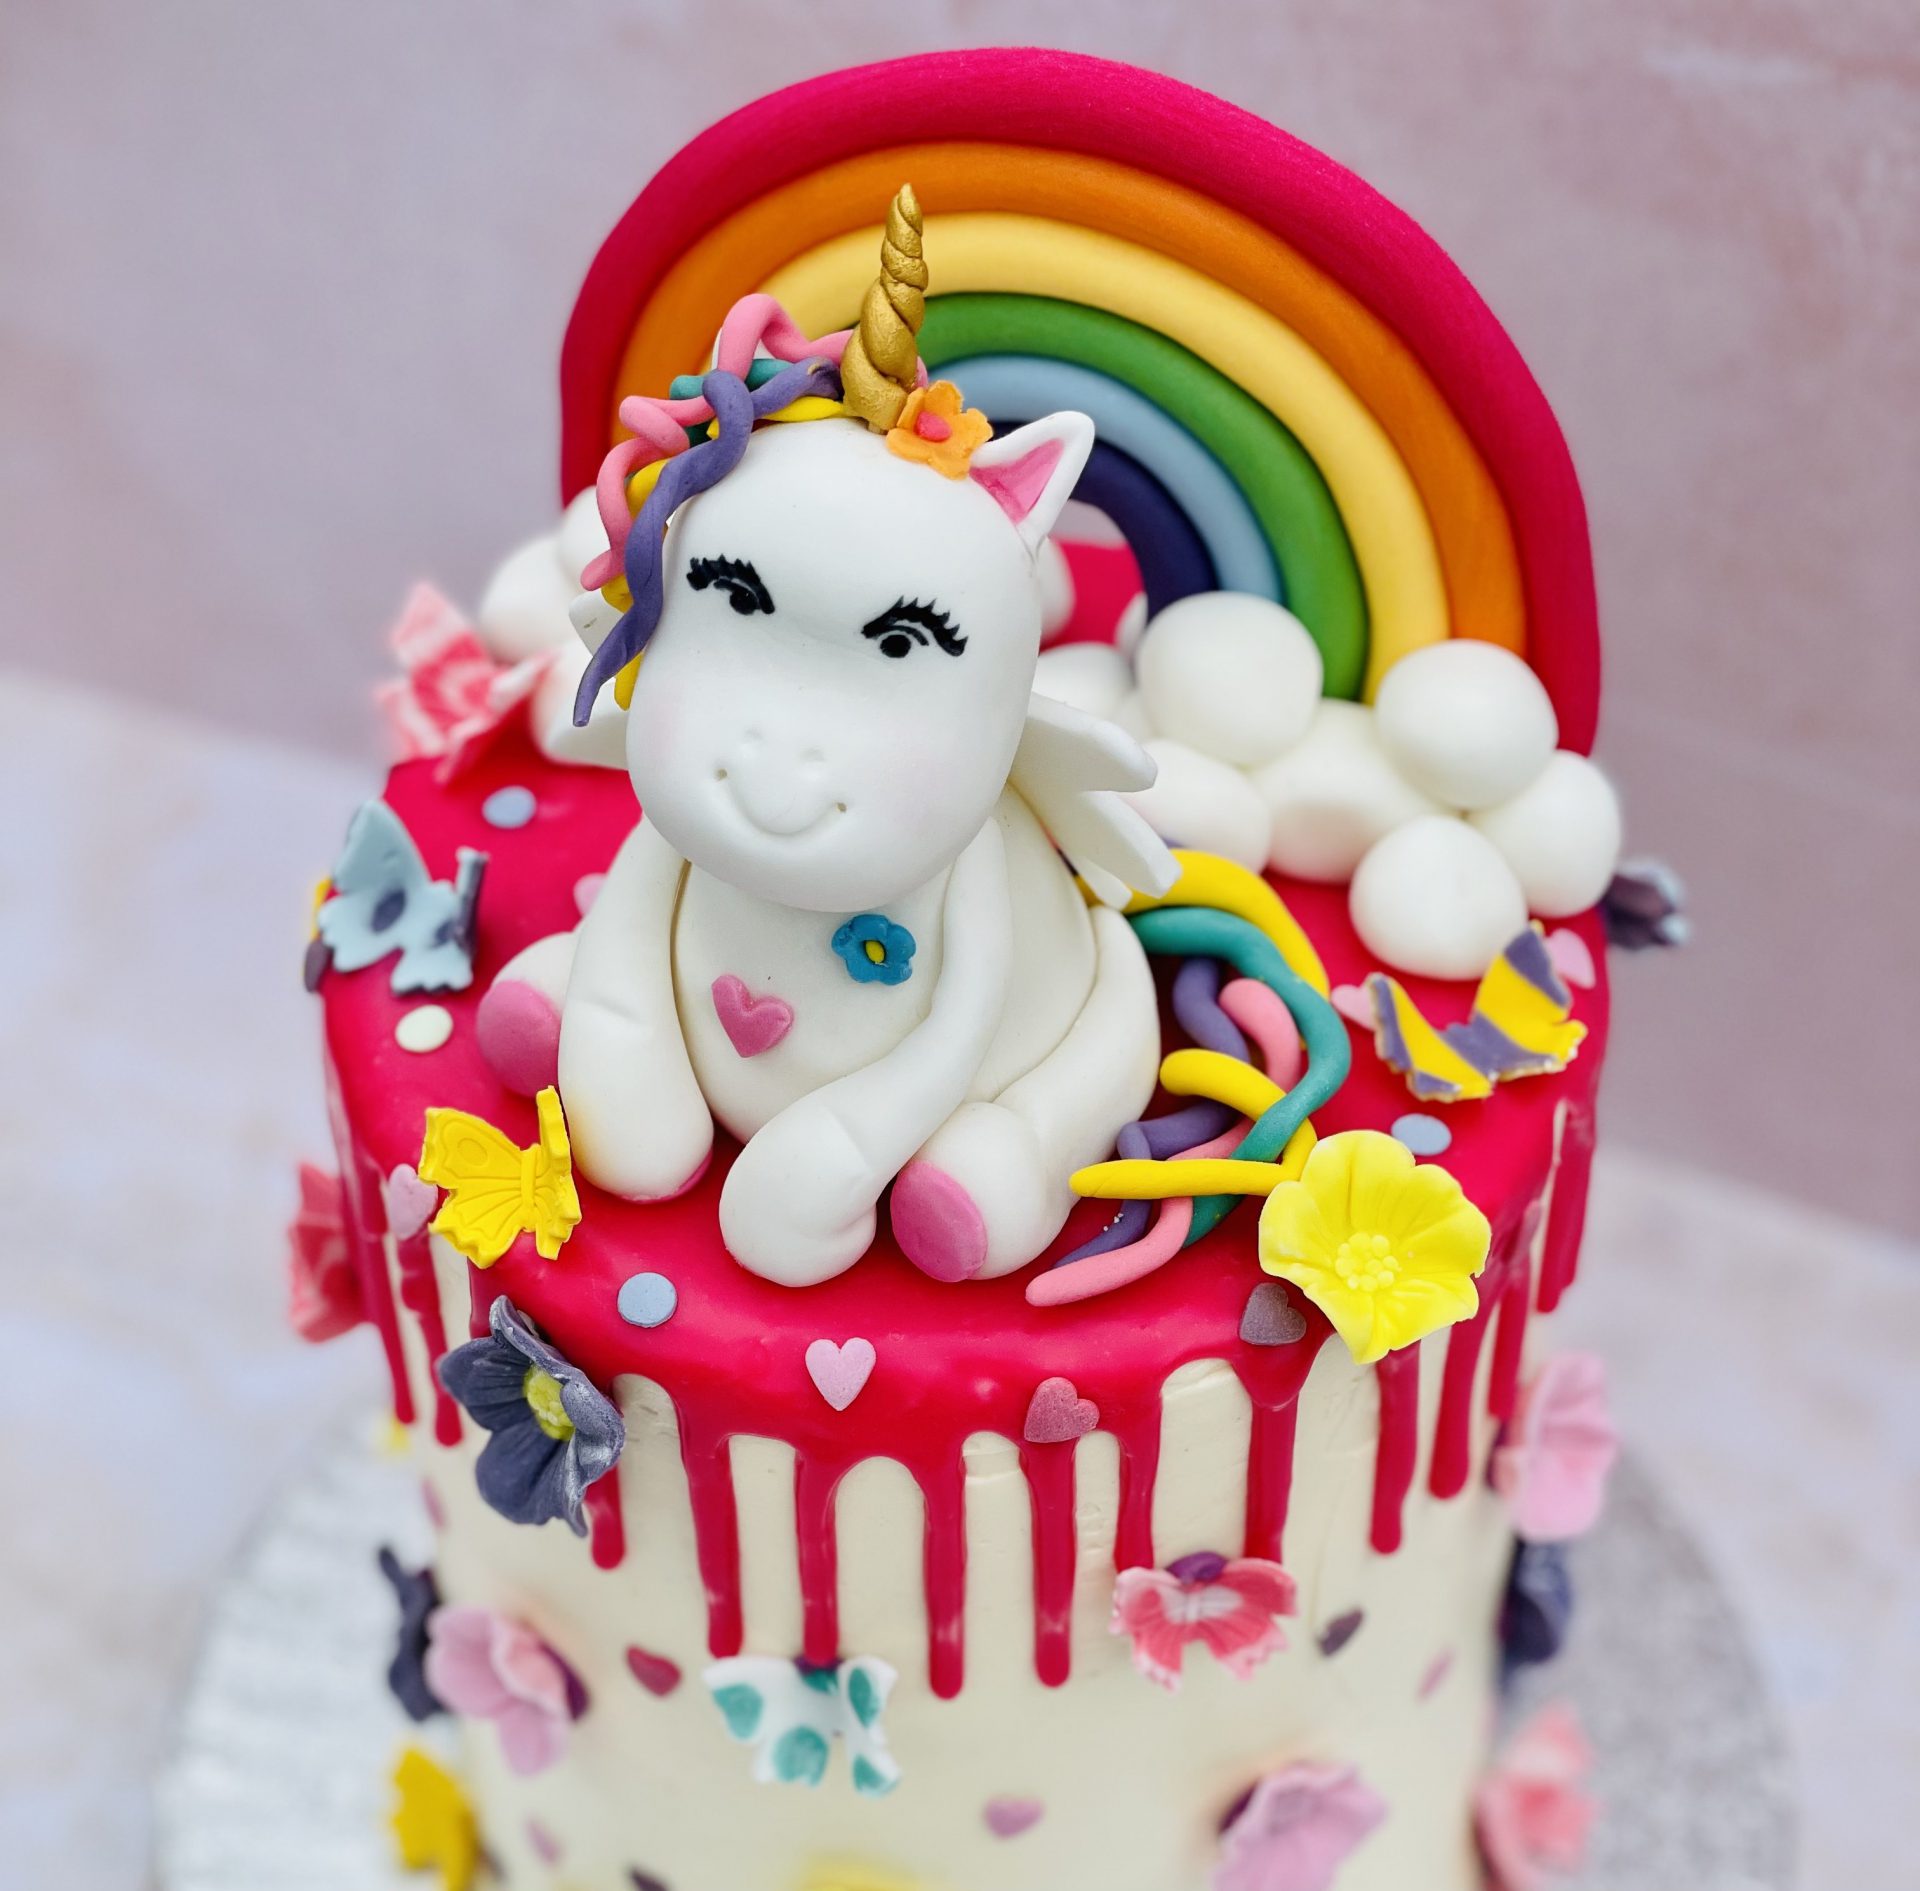 Rainbow Cloud Cake | Mywebsite